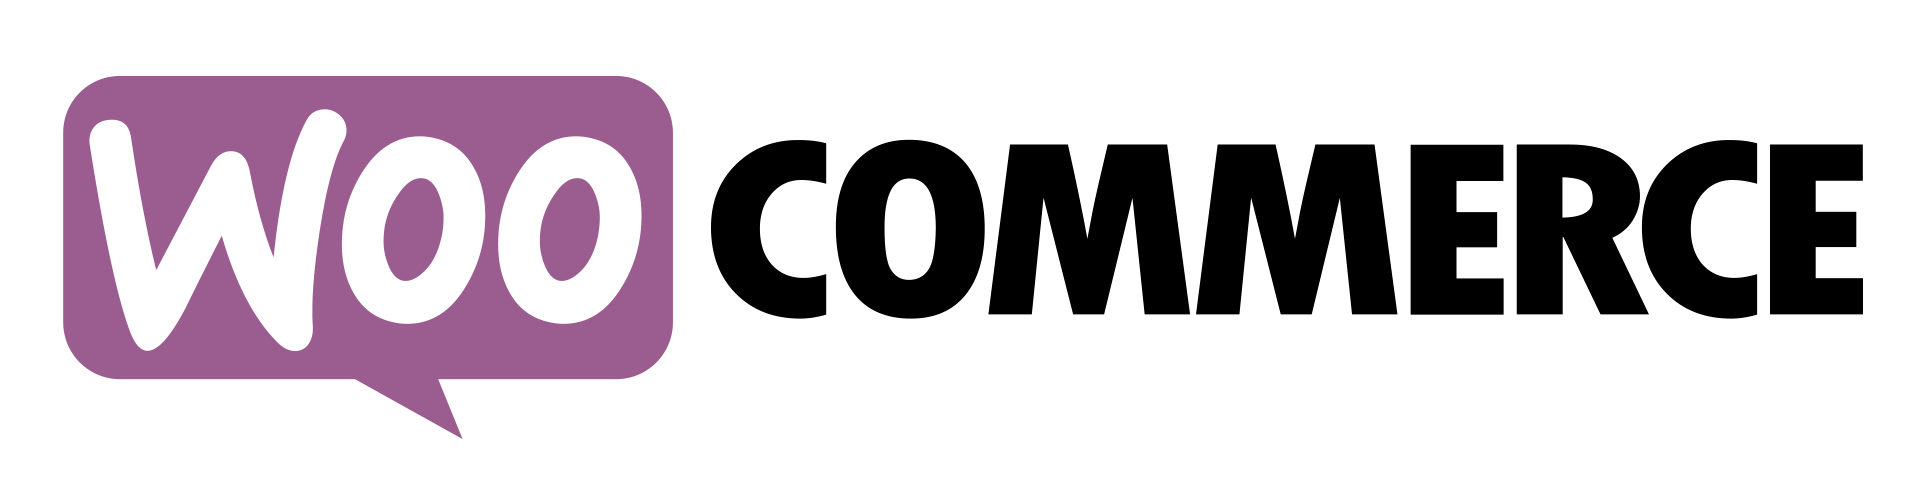 wocommerce-logo